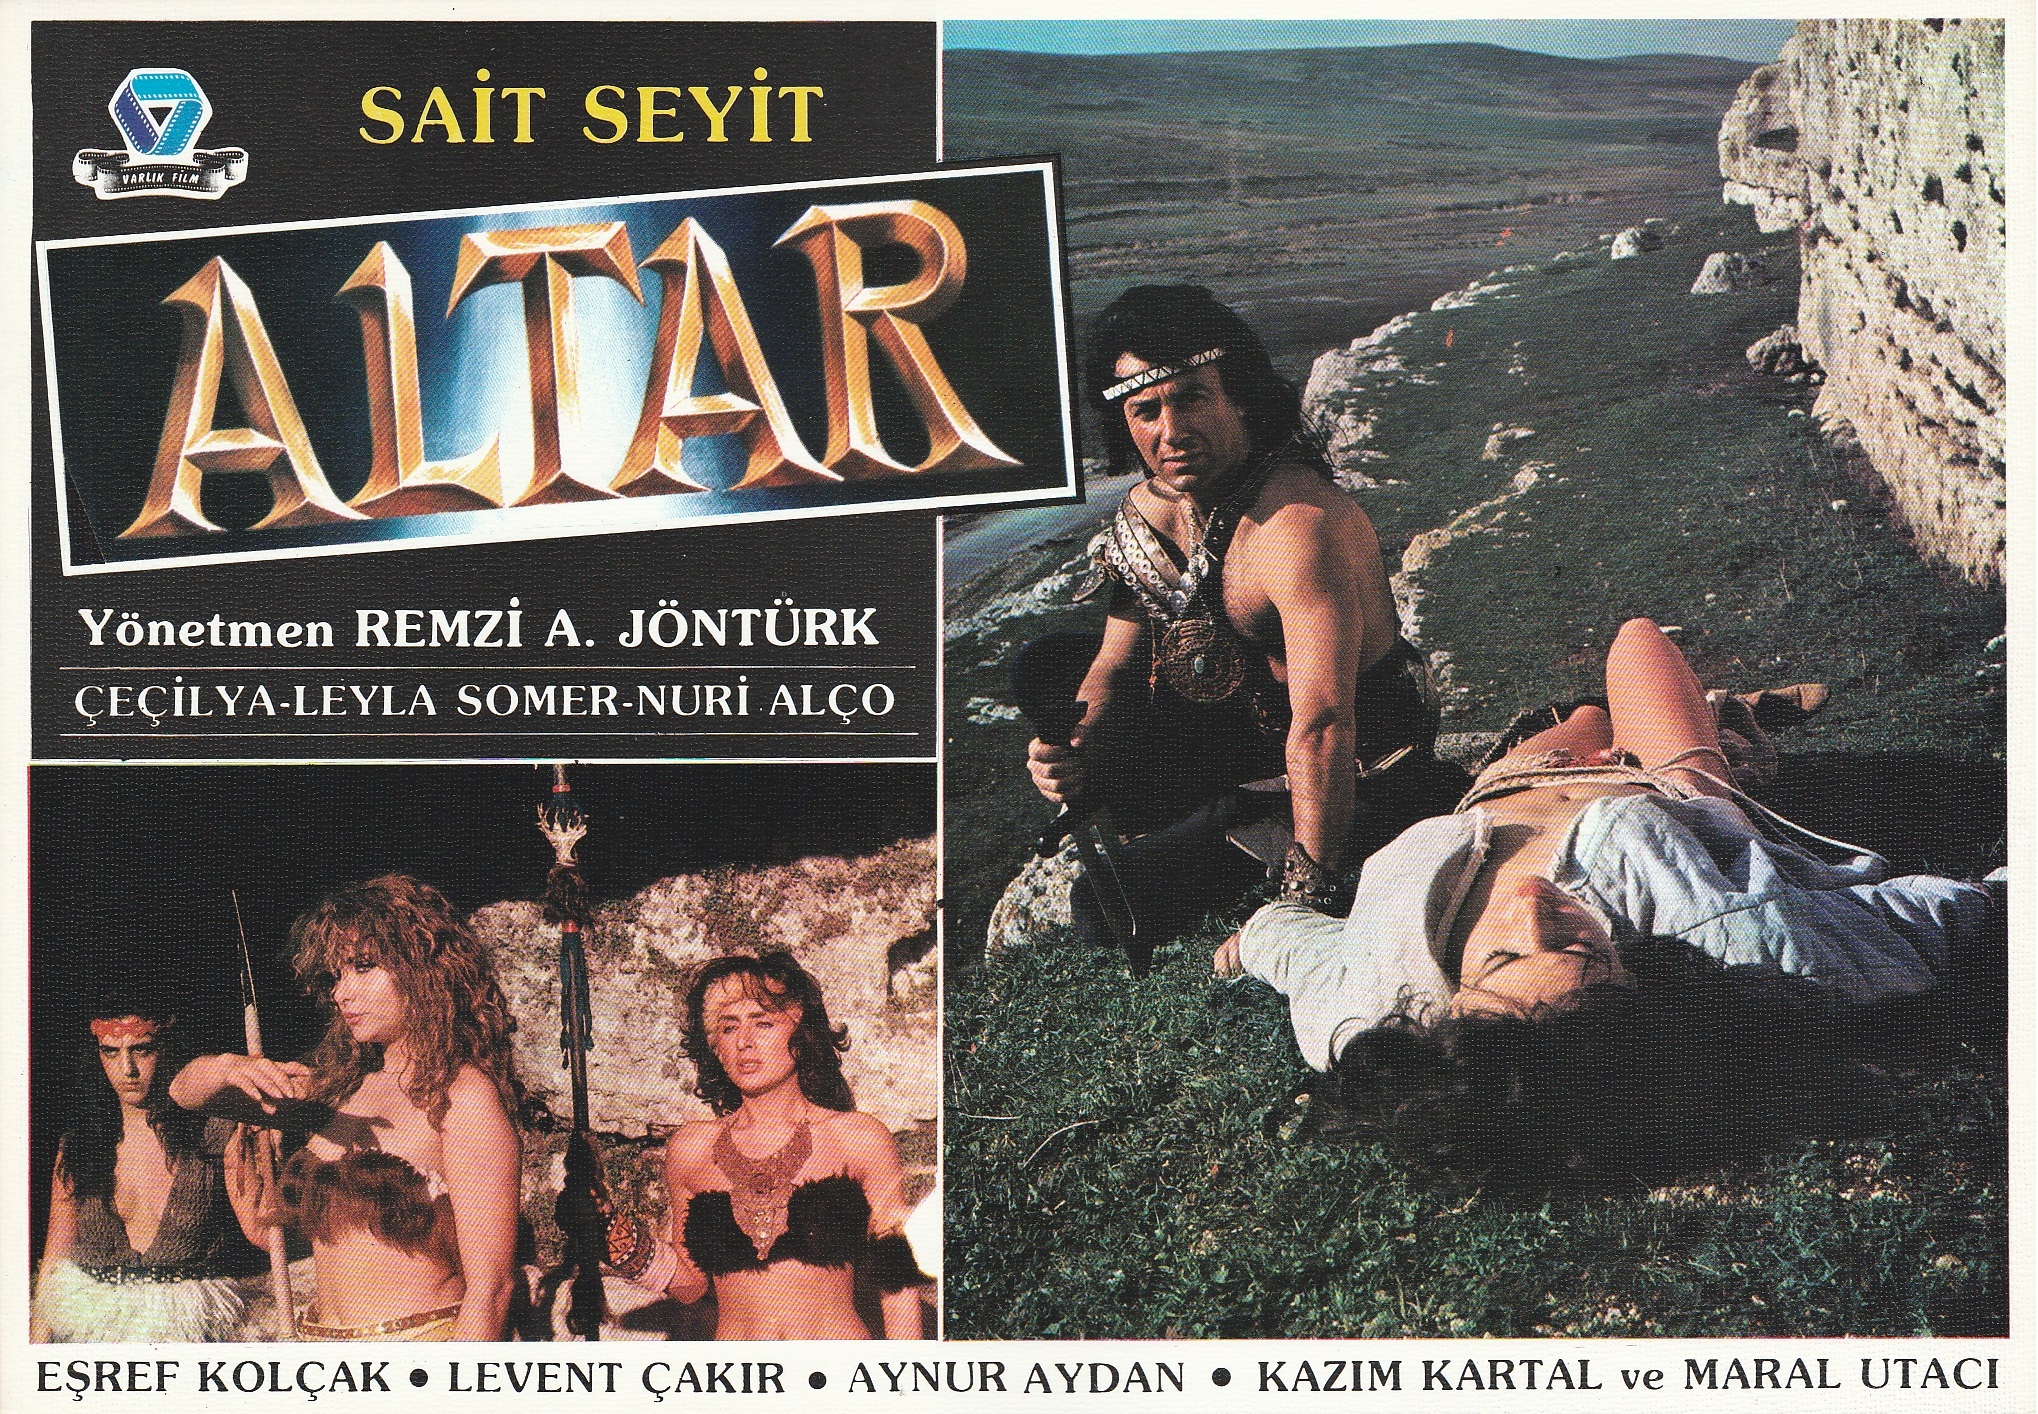 Altar (1985) Screenshot 5 